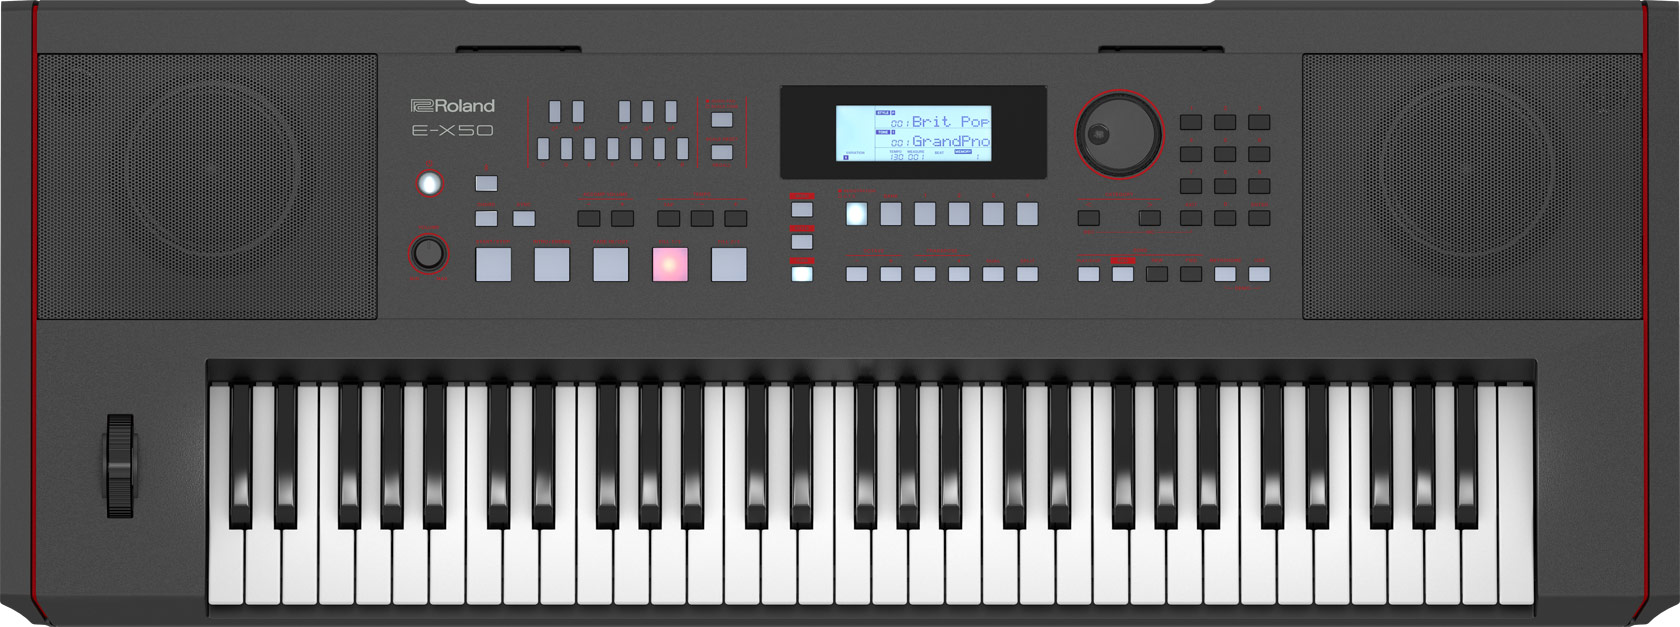 Roland E-X50 Keyboard (Sort)